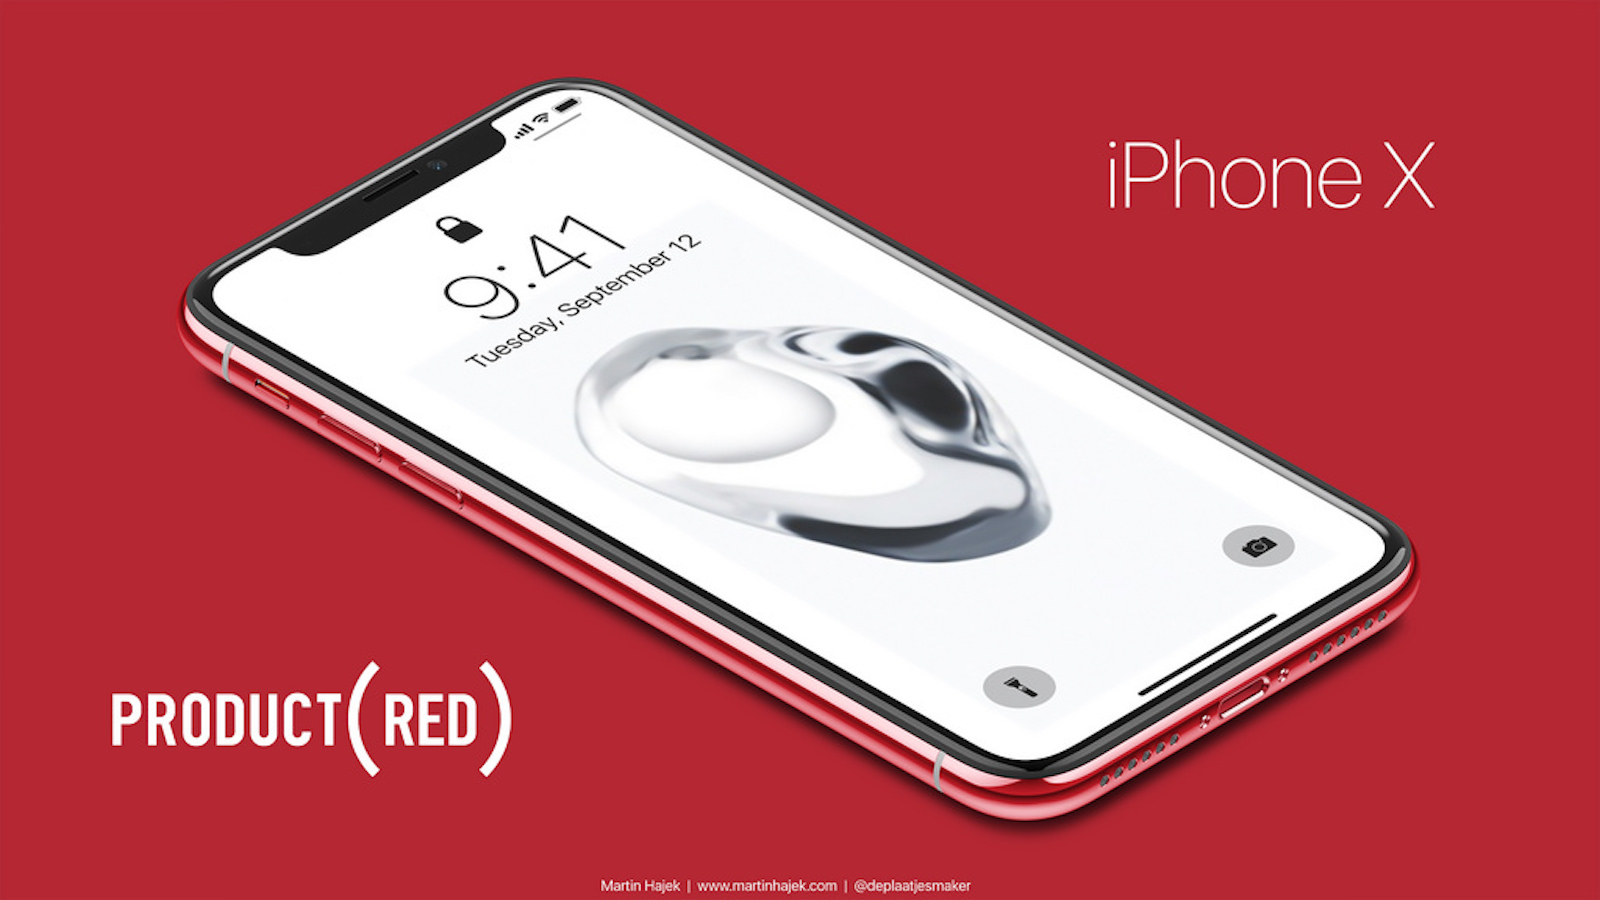 Iphone 8 Xに Product Redモデル 登場か ゴリミー